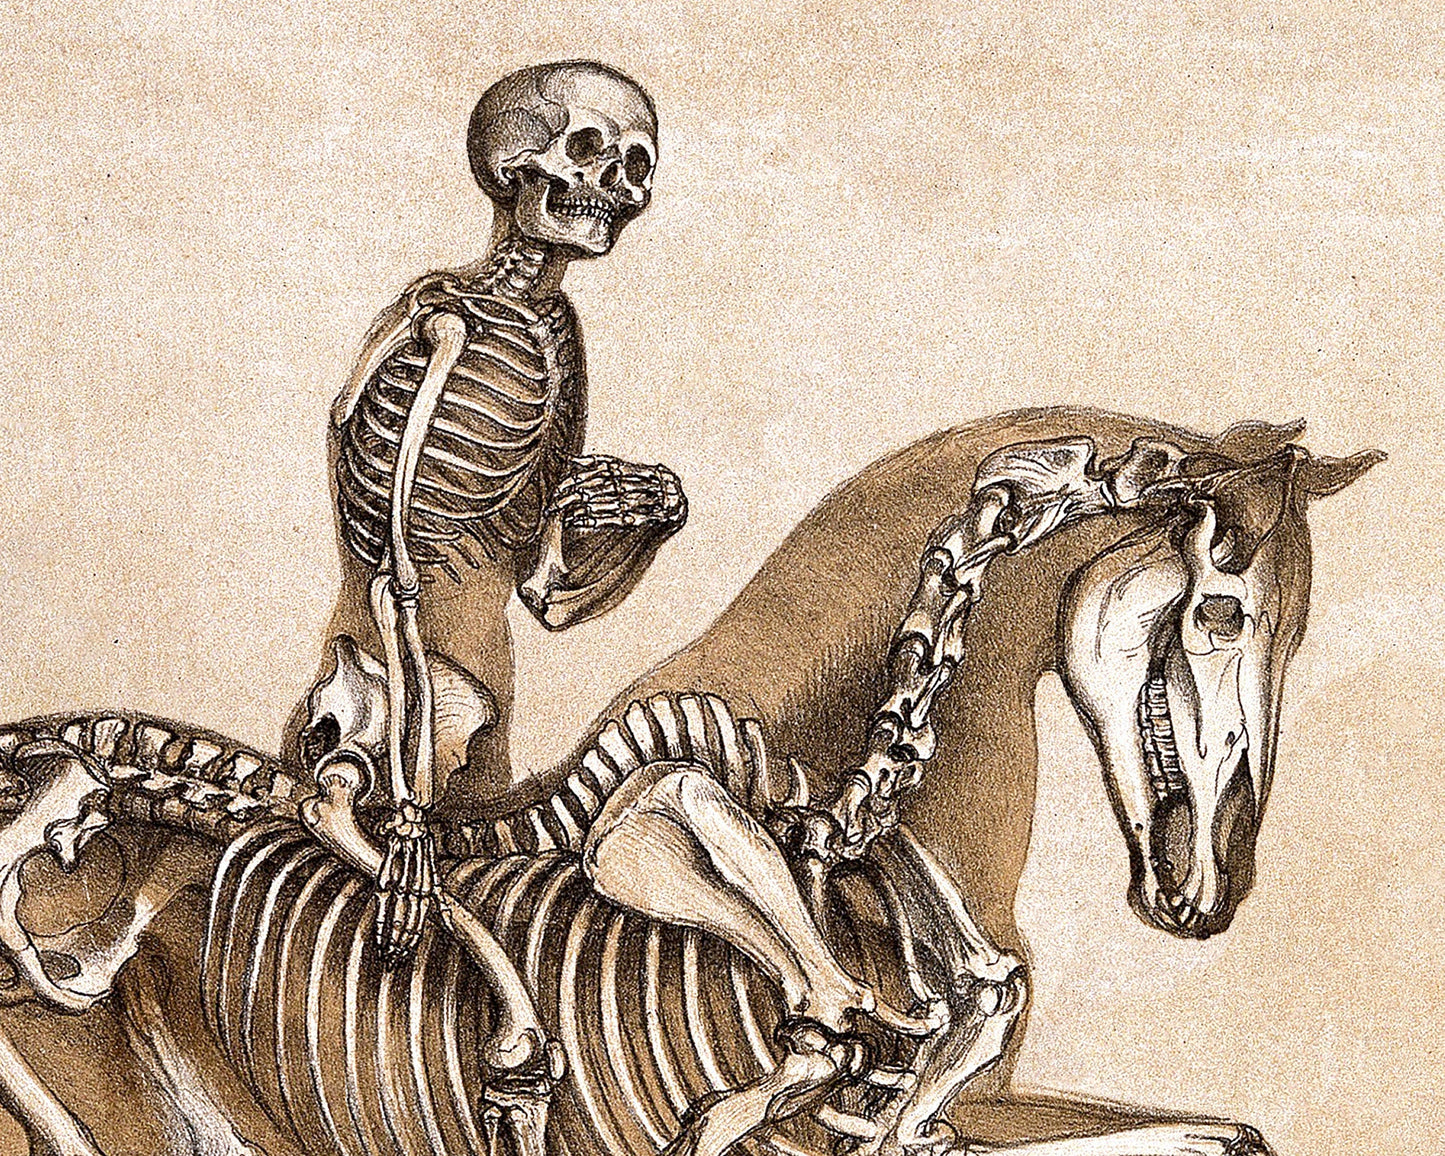 Vintage anatomical illustration | Human & horse anatomy | Antique bones | Skeleton wall art | Veterinarian and doctor gift